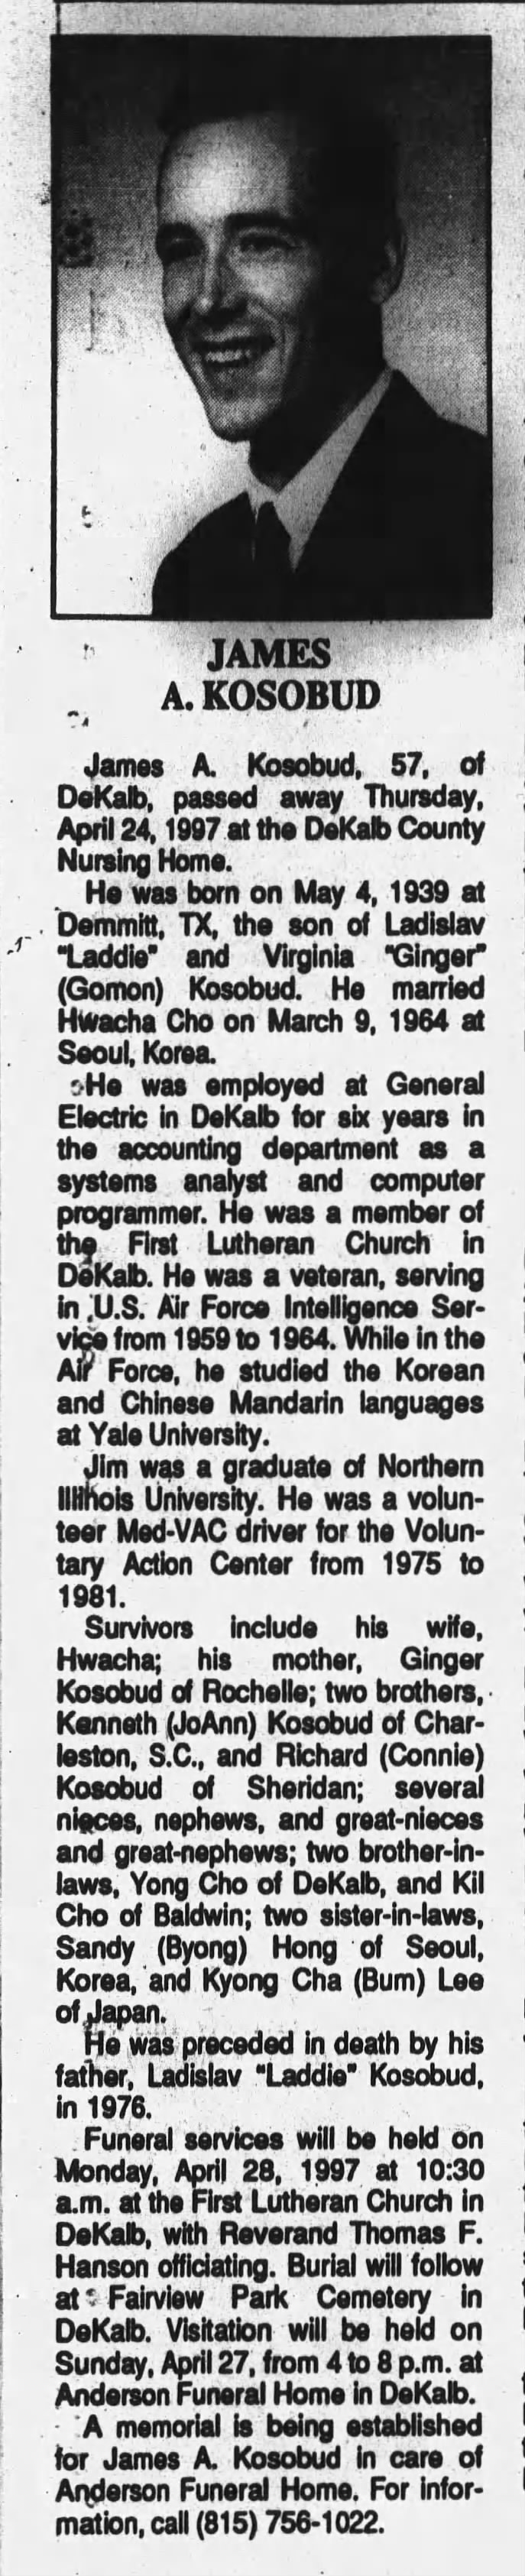 James Kosobud, obituary 1997, De Kalb, Illinois